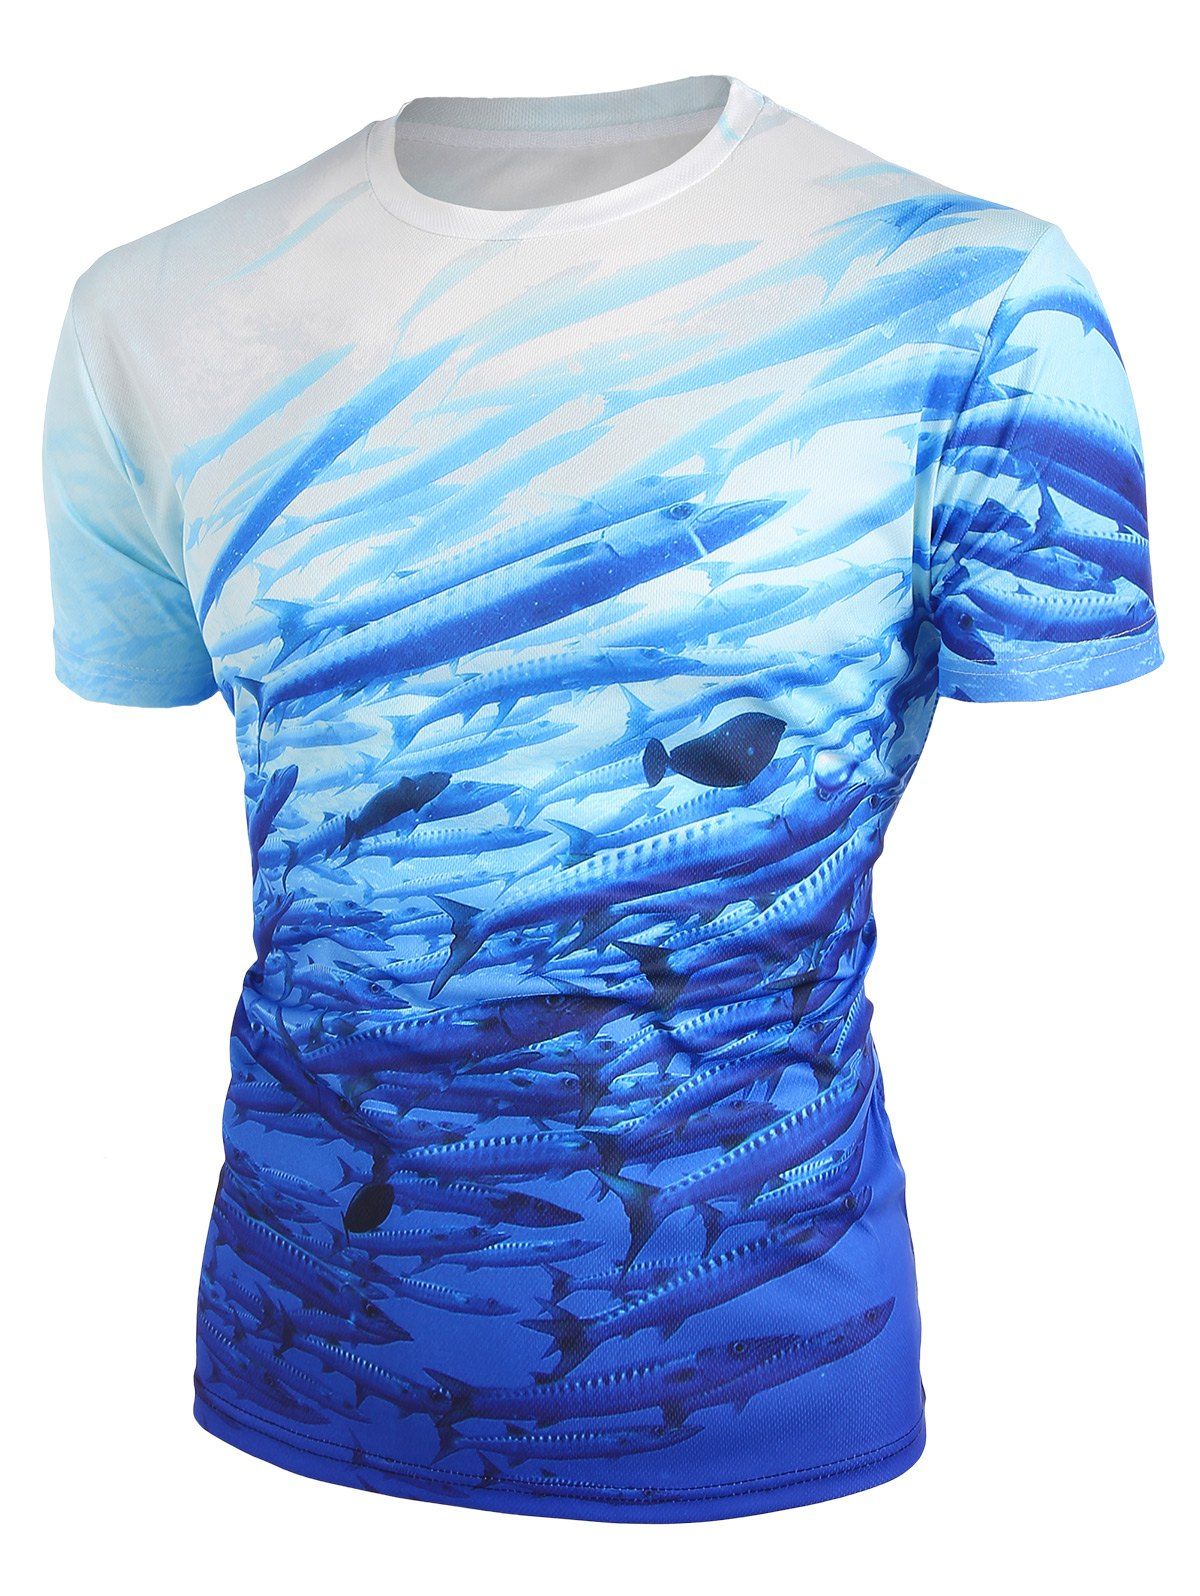 Marine Life Fish Print Perforated T-shirt - multicolor 3XL